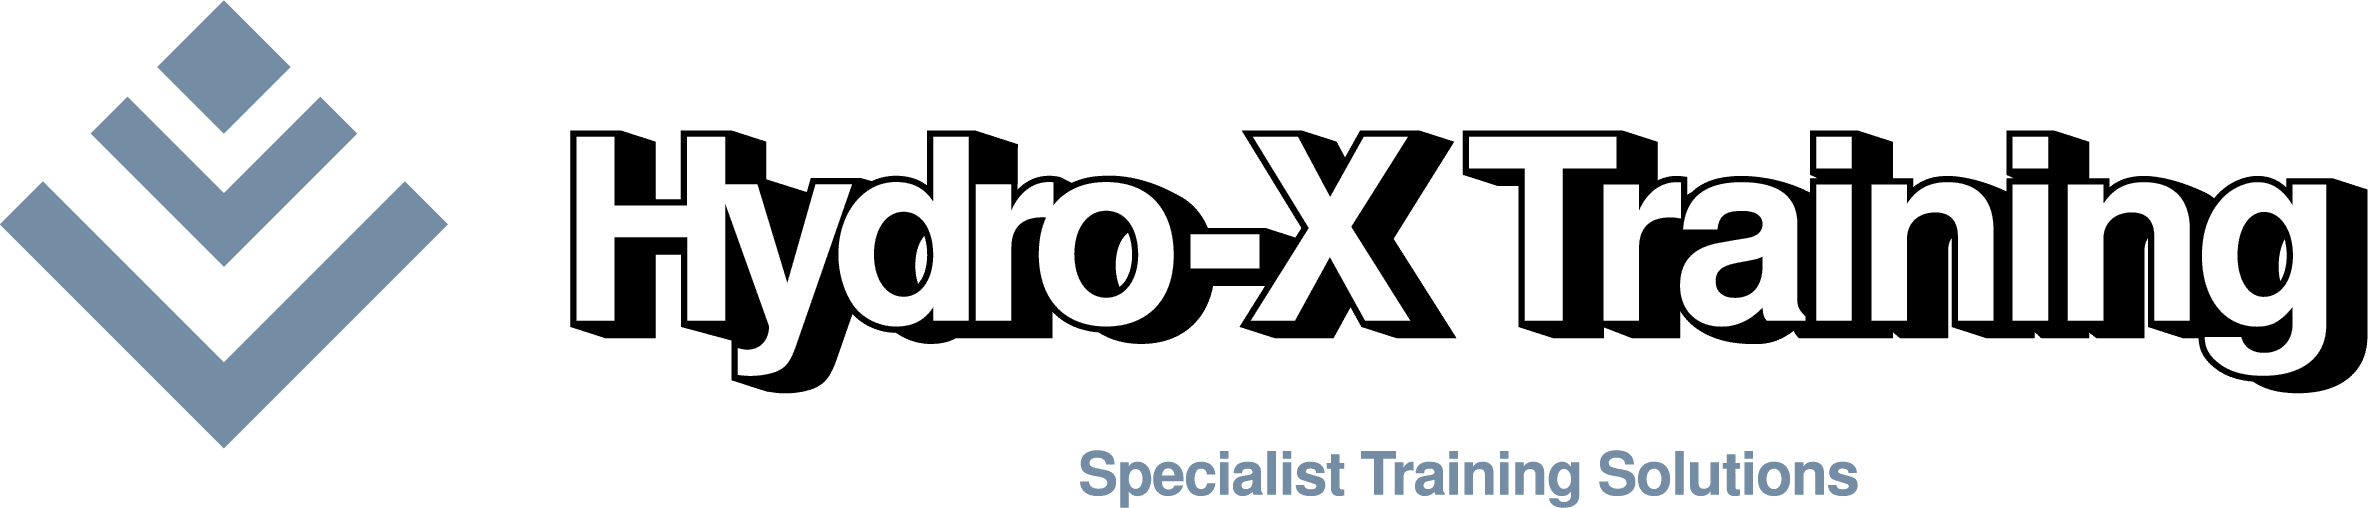 Hydro-X Training